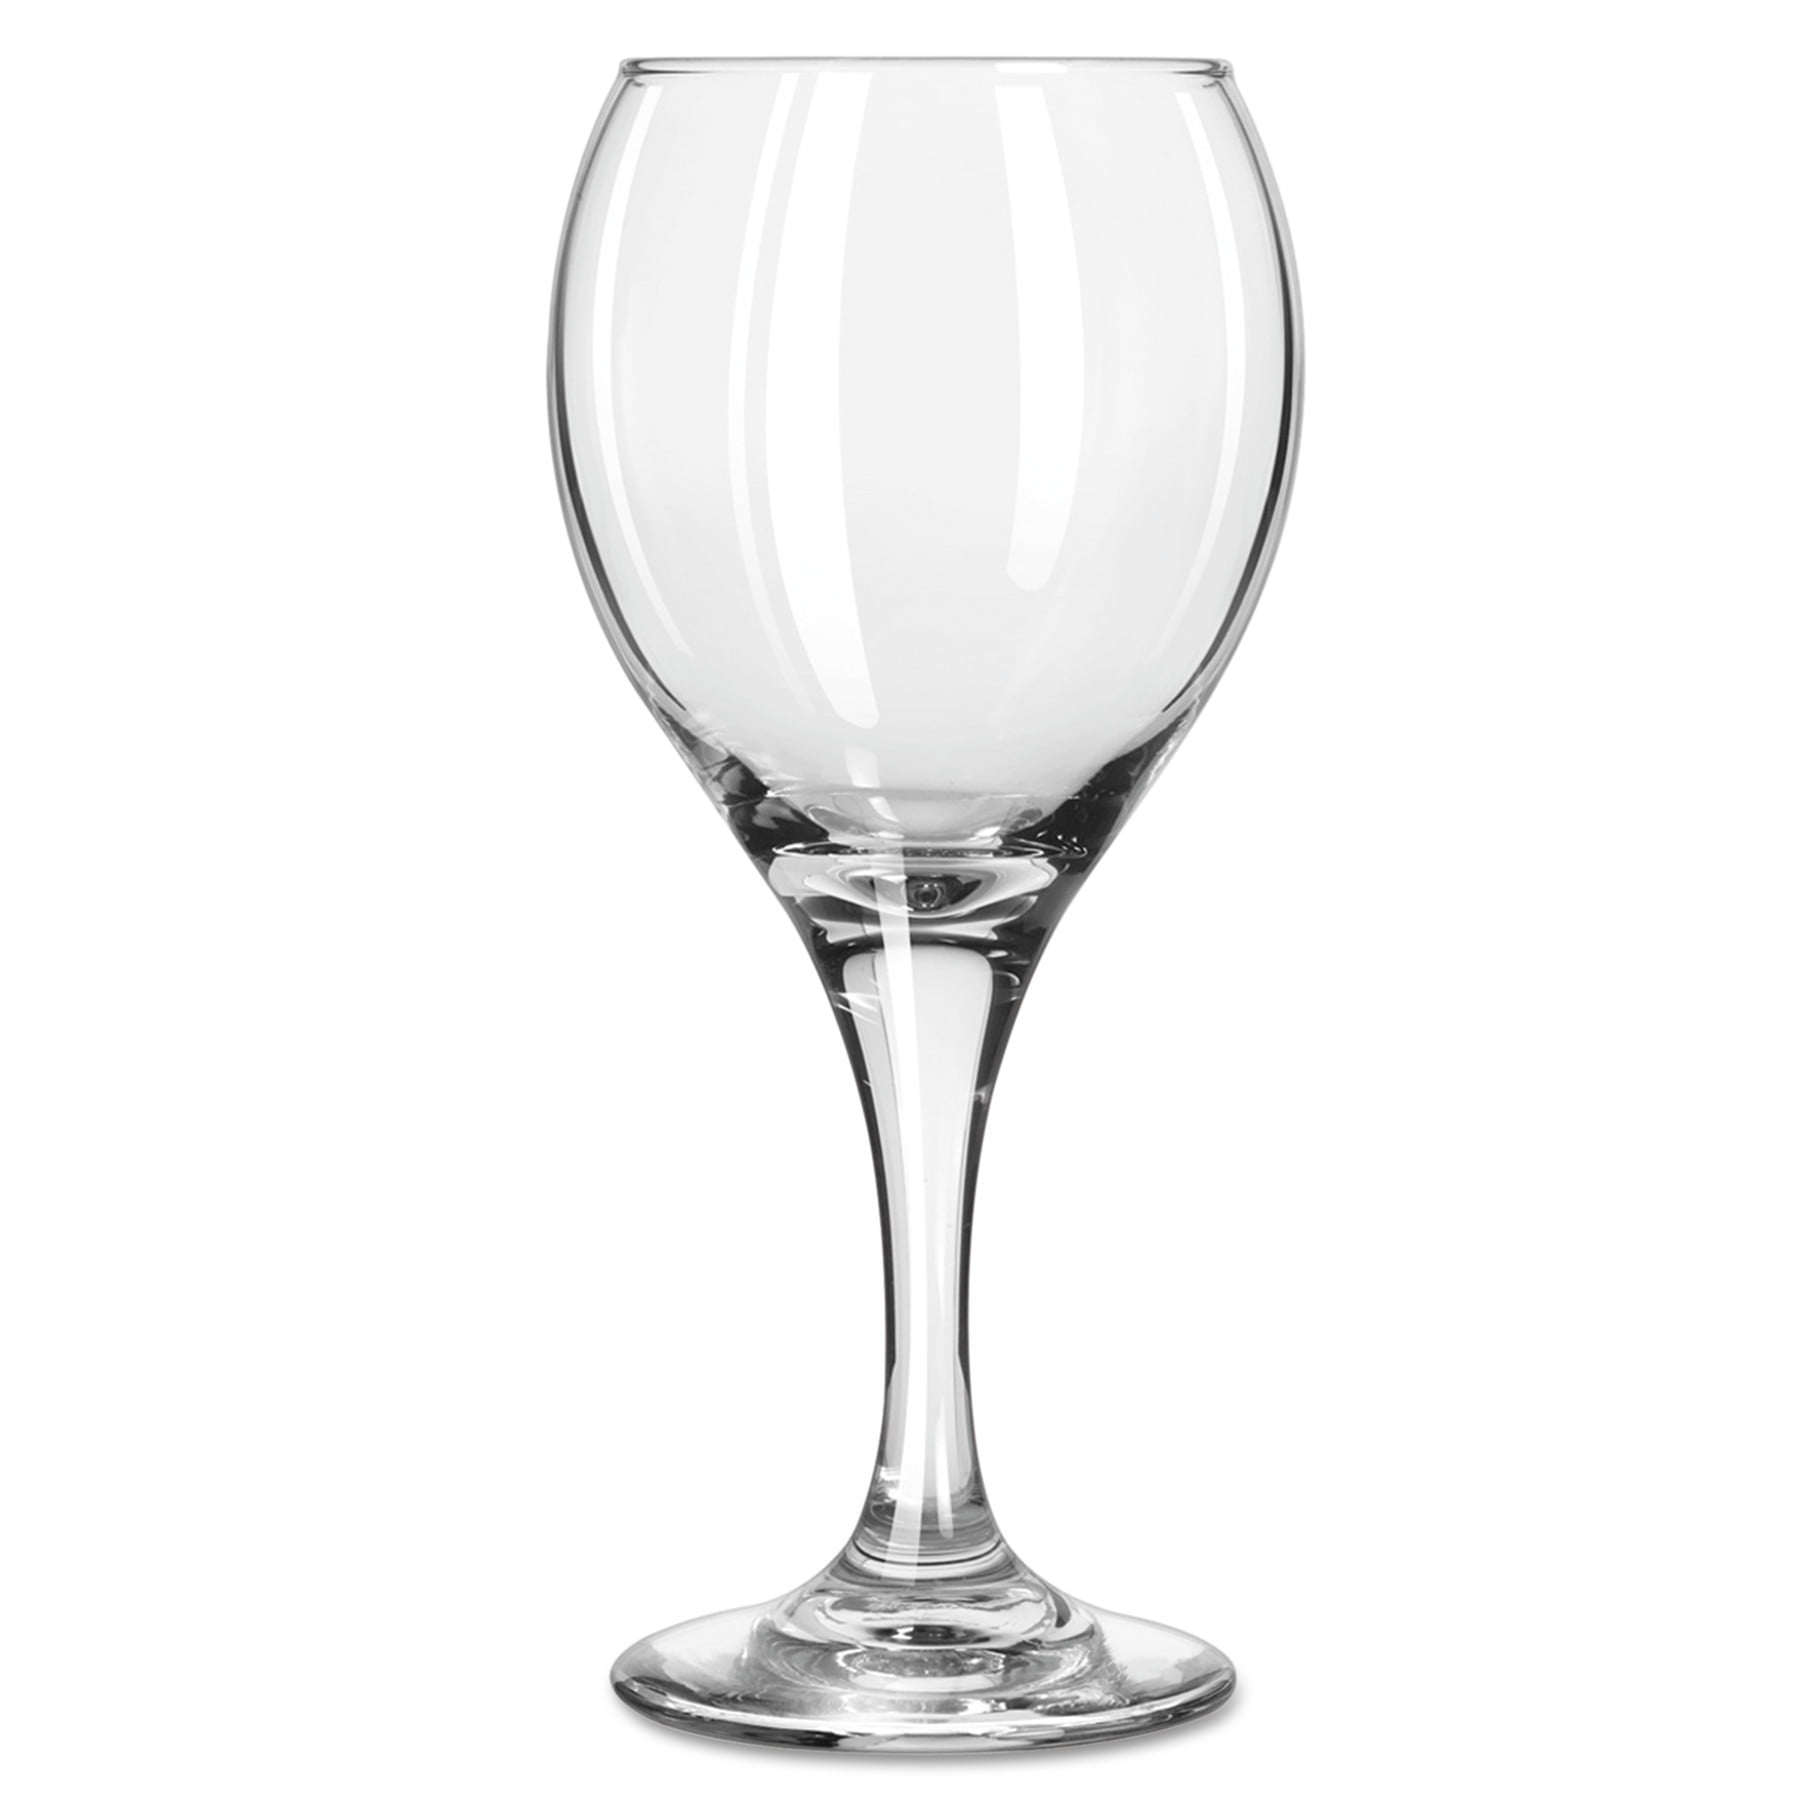  Wine Glass with Light-Up Spiral Stem - 10 oz. 118438